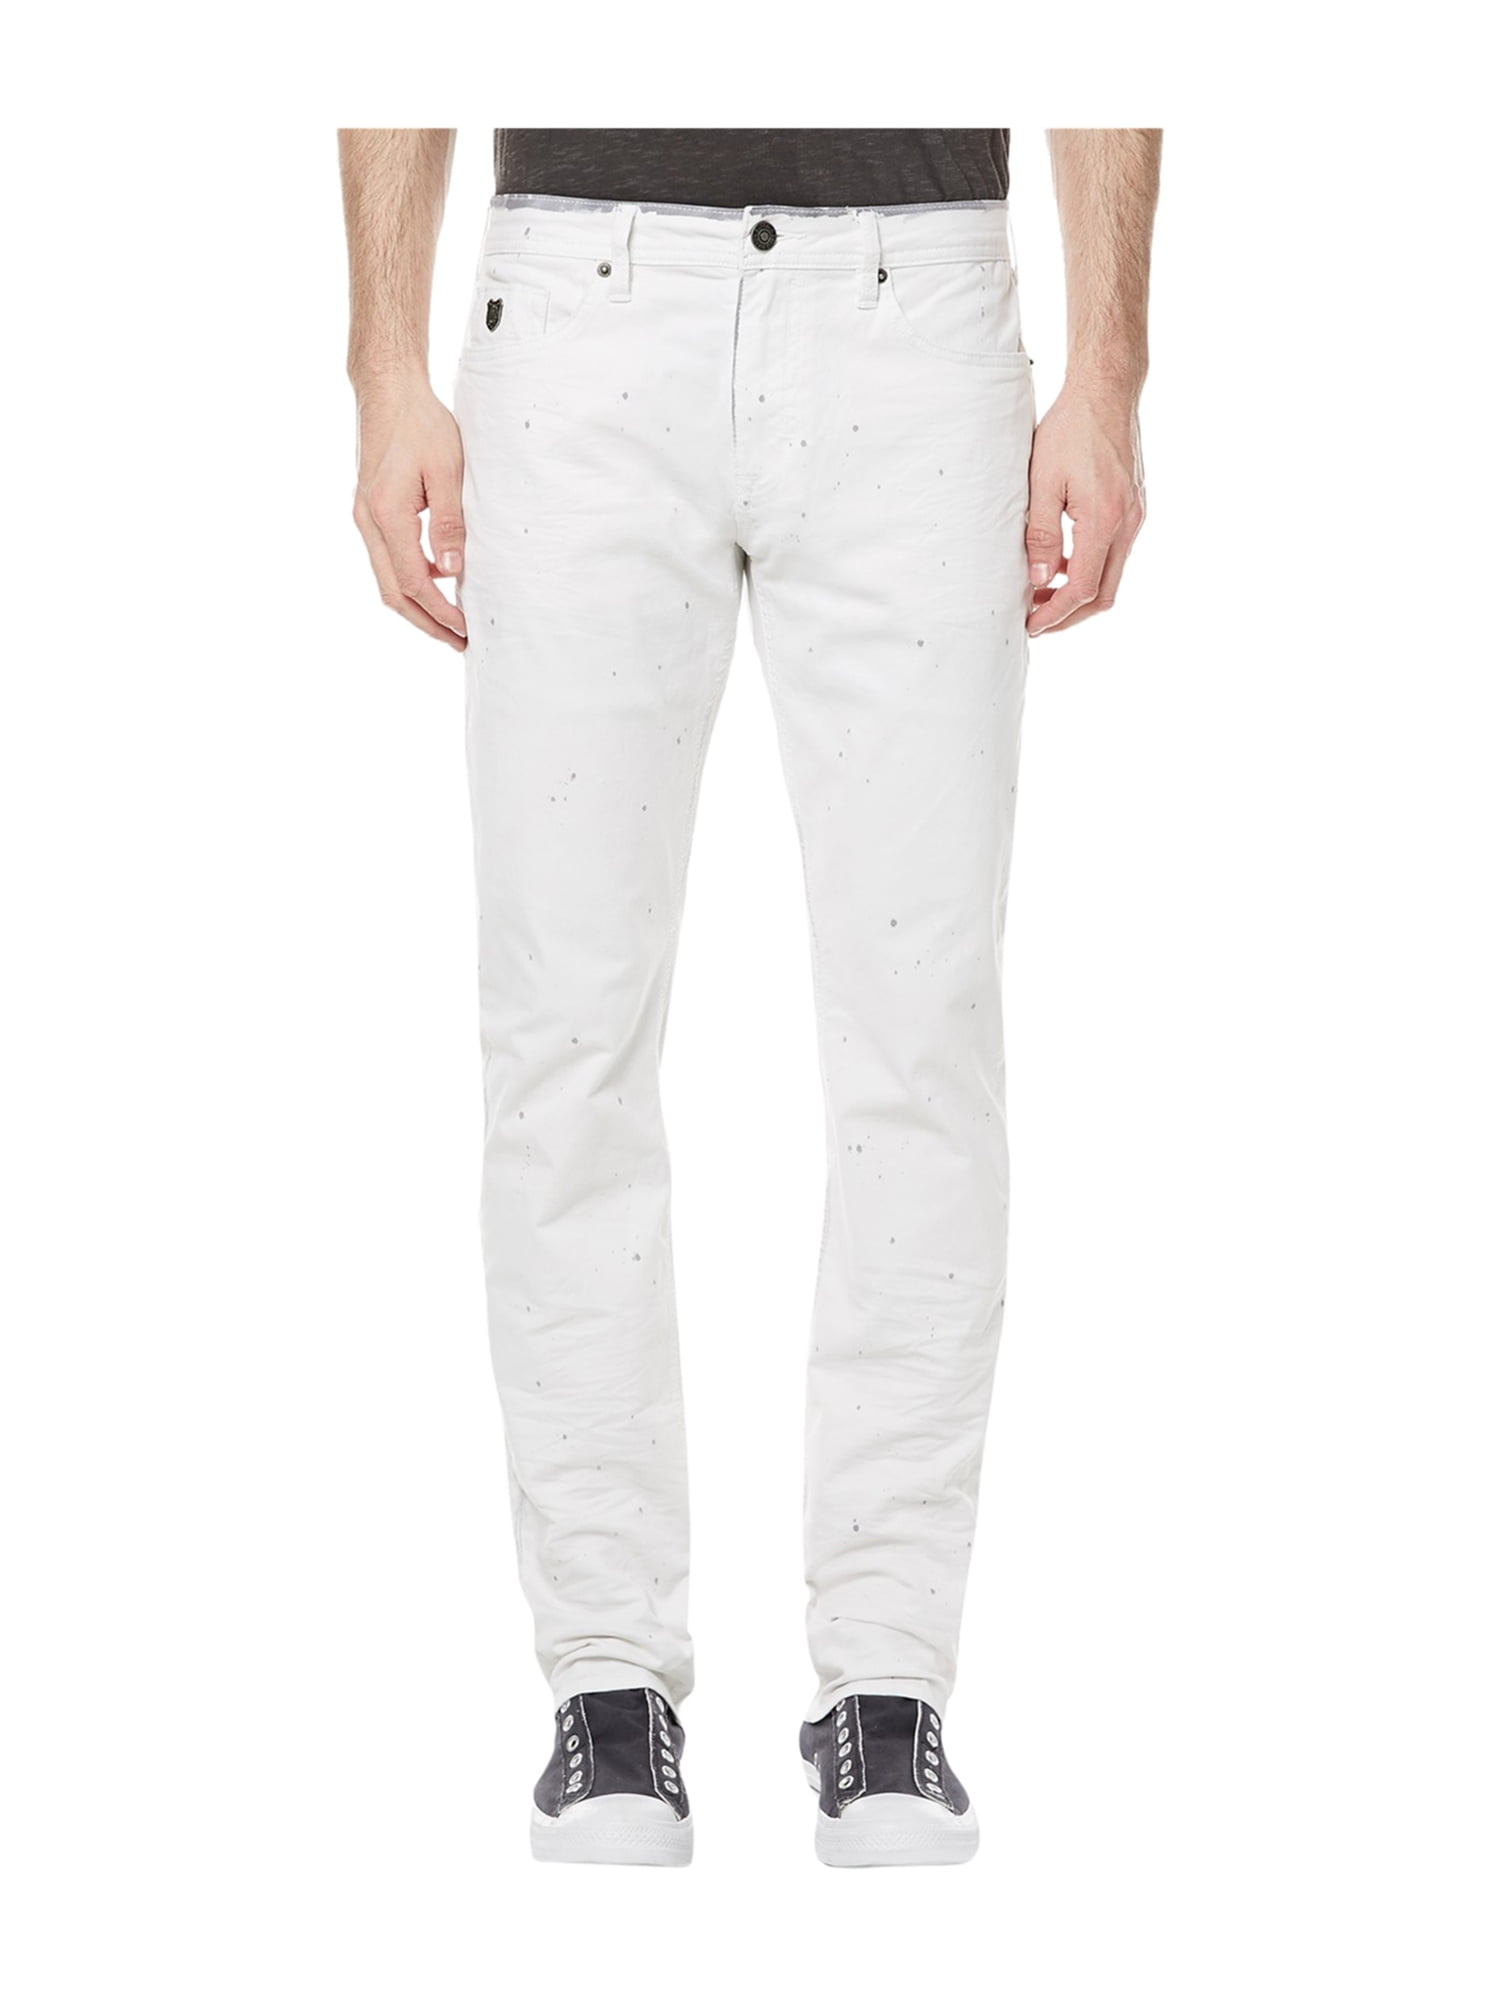 white stretch jeans